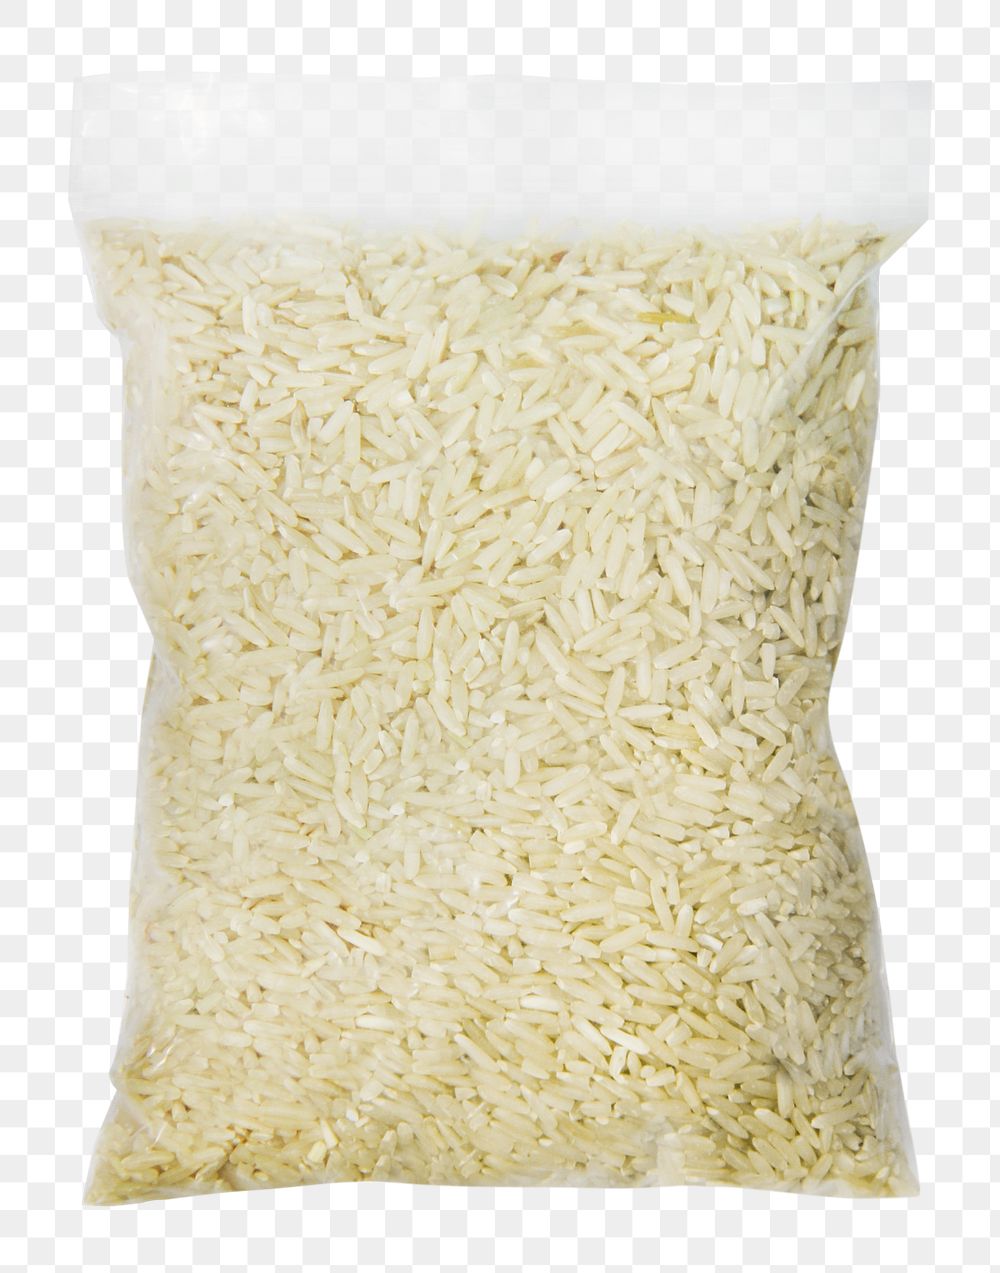 Bag of rice png sticker, transparent background